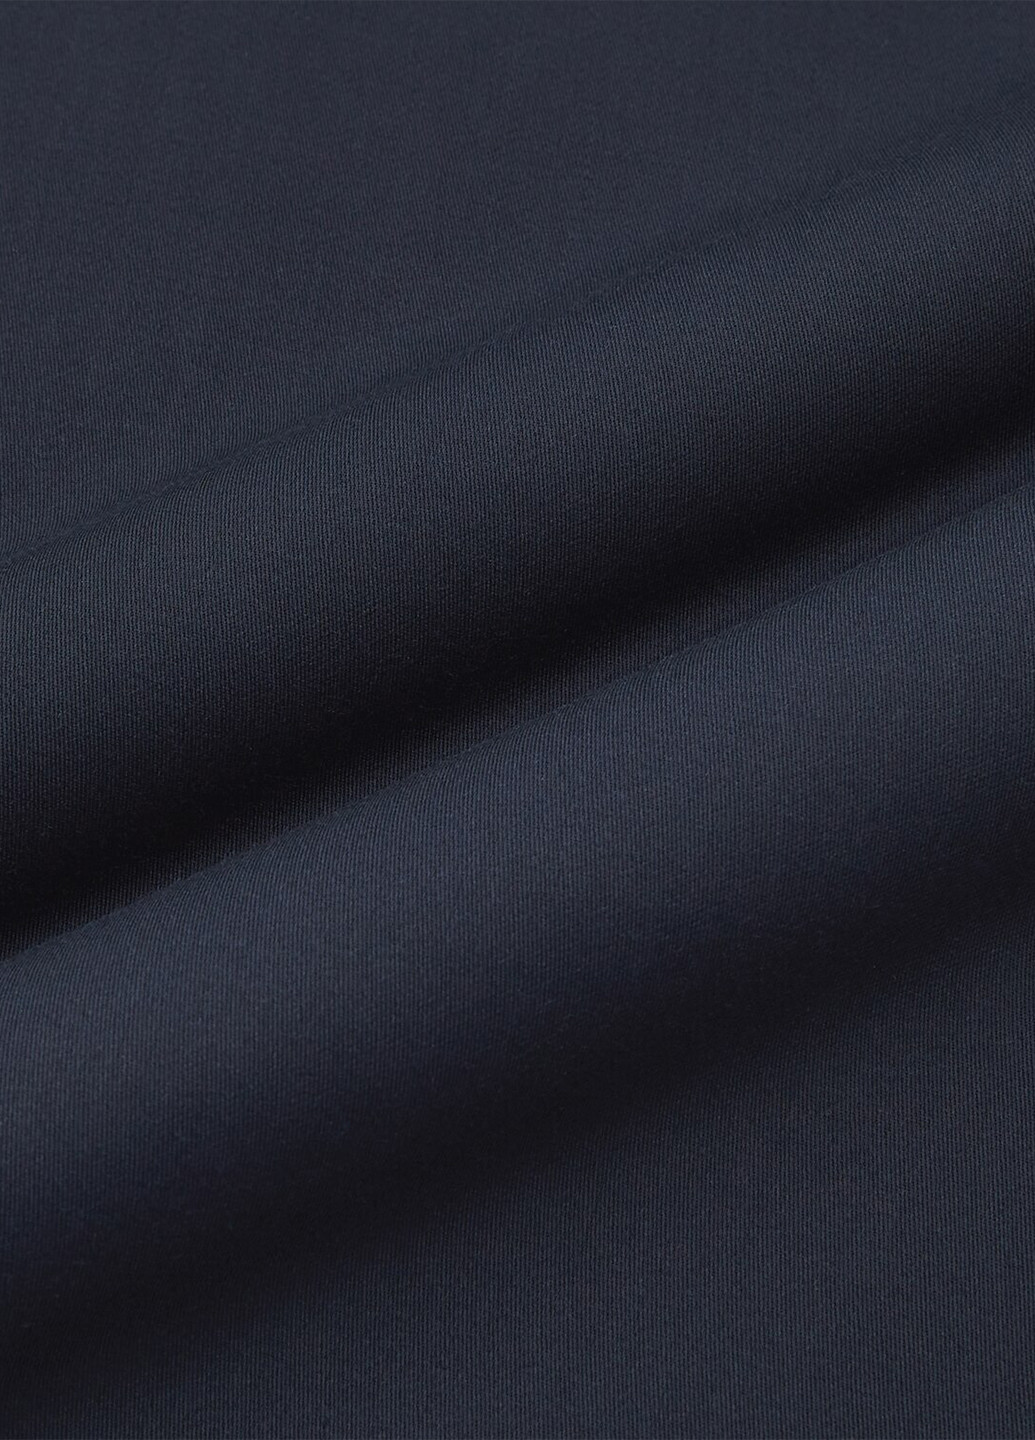 Темно-синяя всесезон пижама (рубашка, брюки) рубашка + брюки Uniqlo